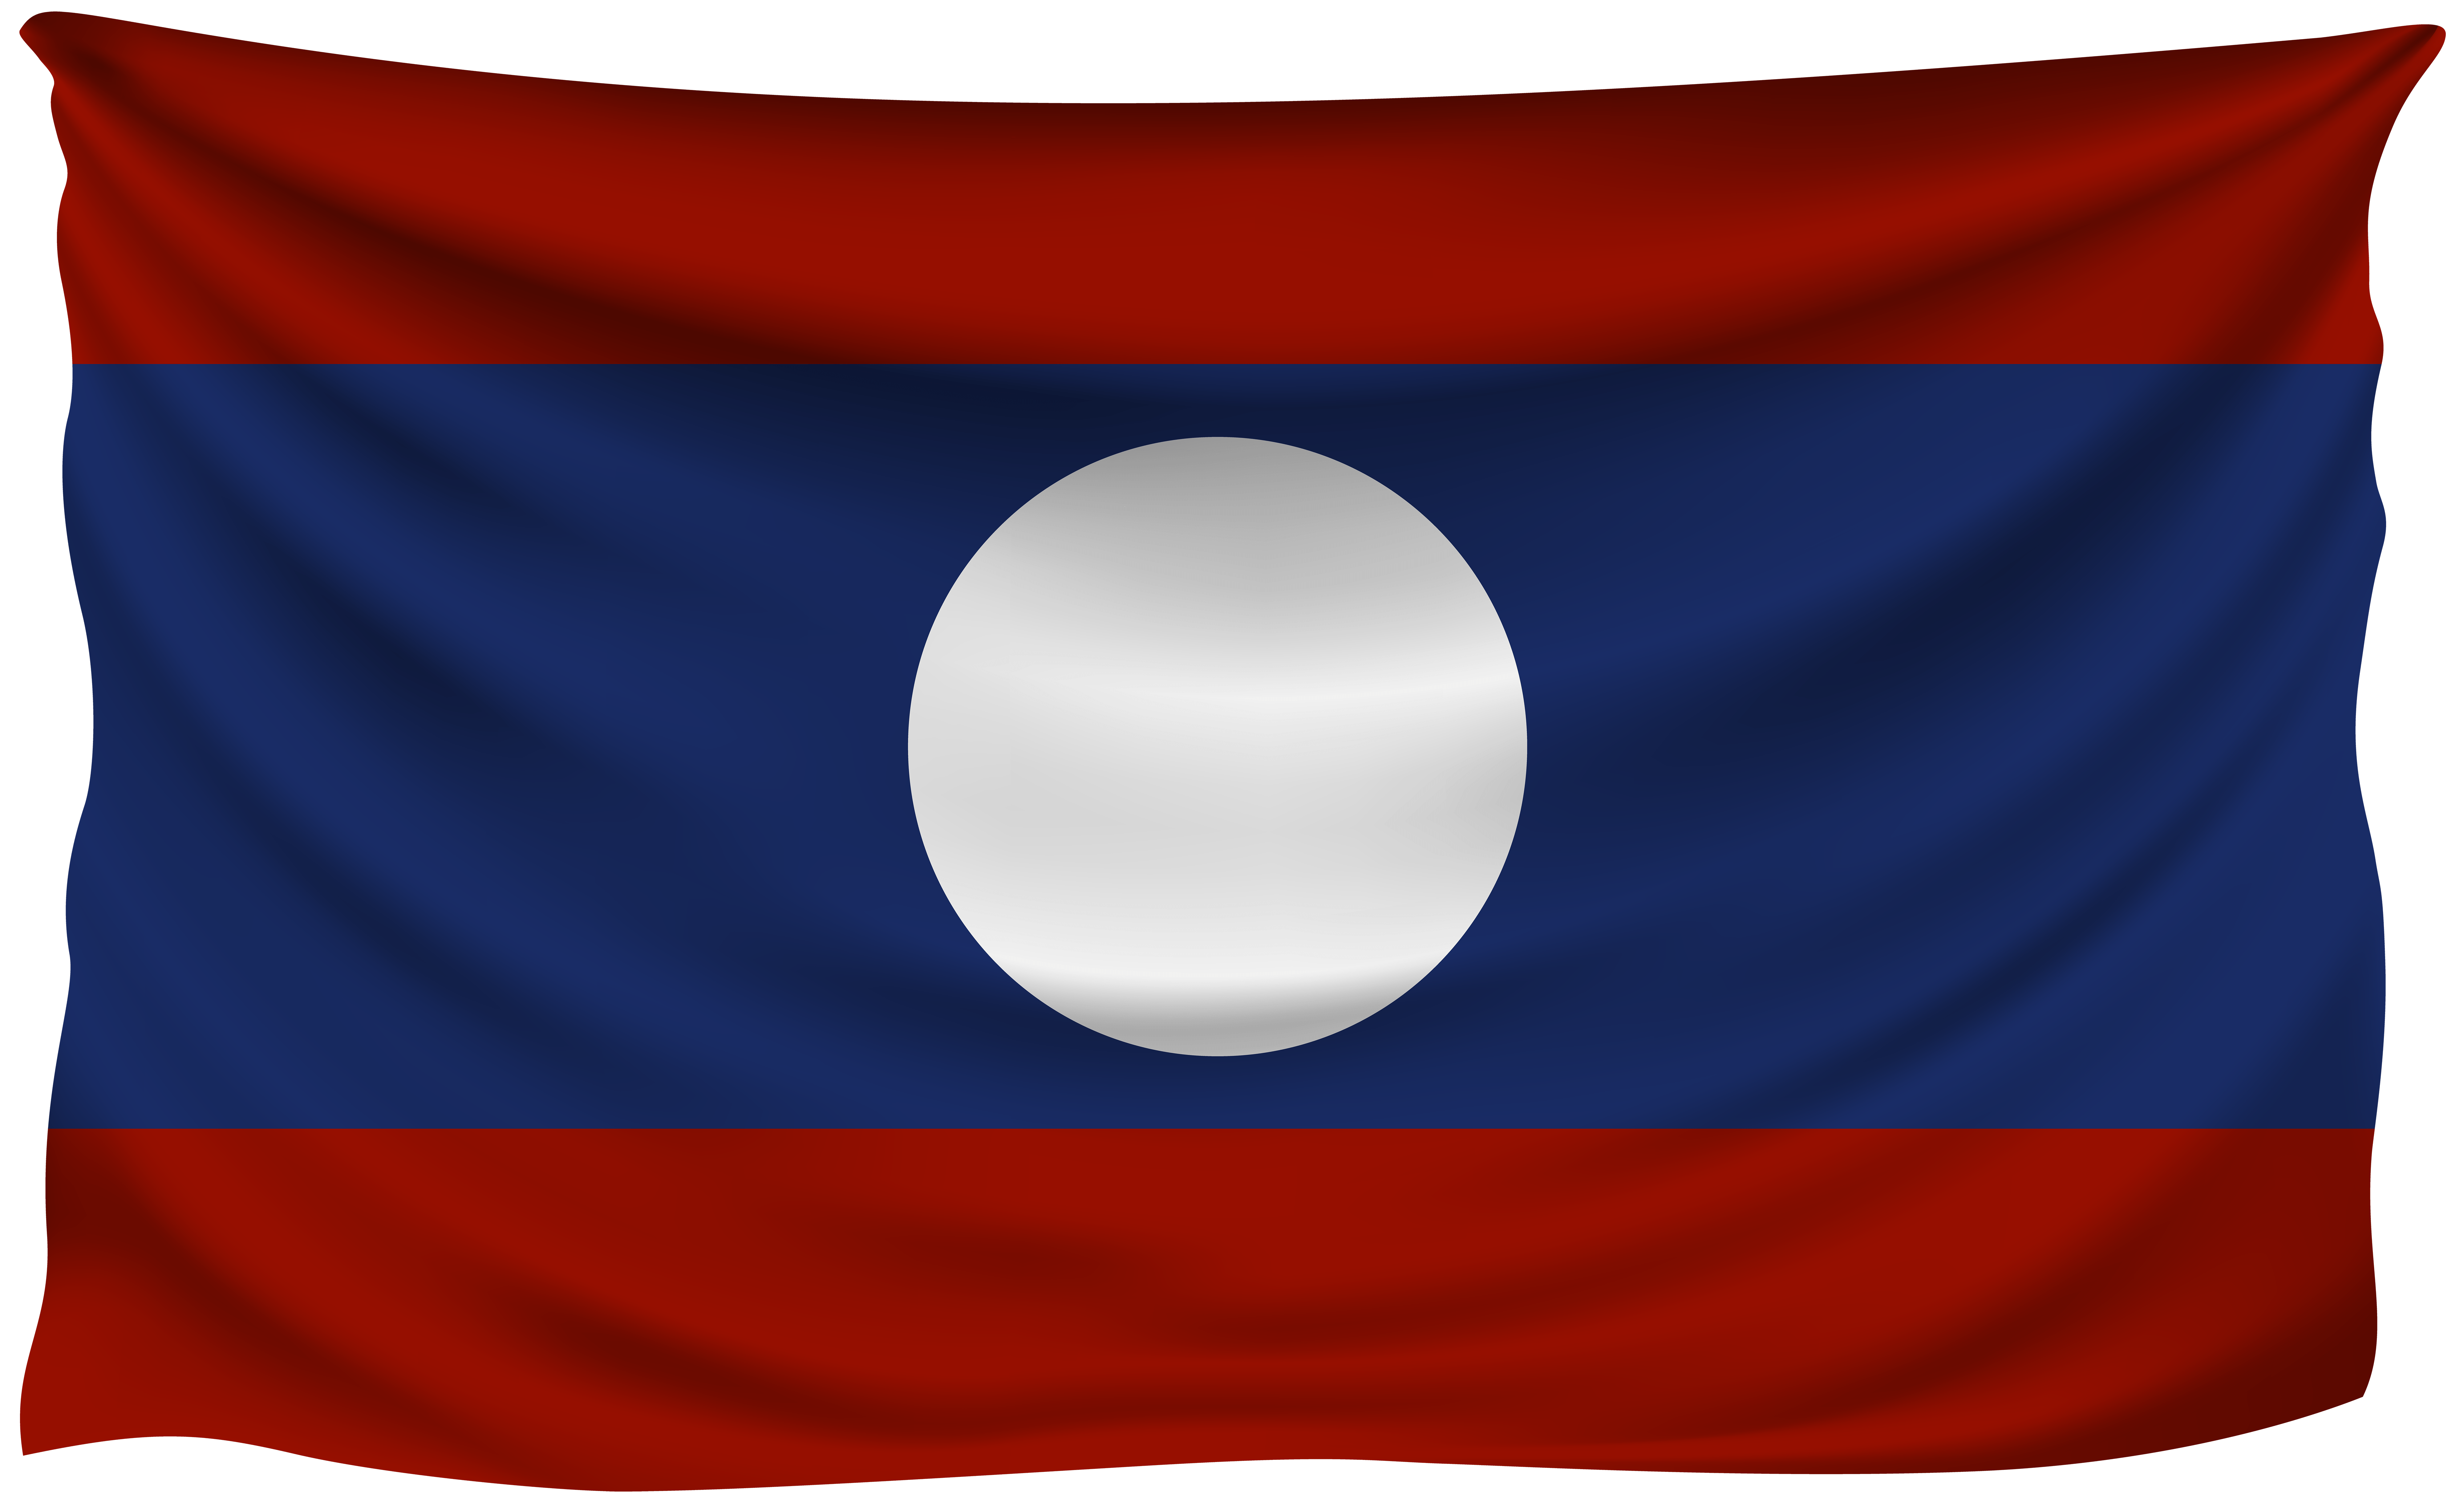 Laos Wrinkled Flag Quality Image